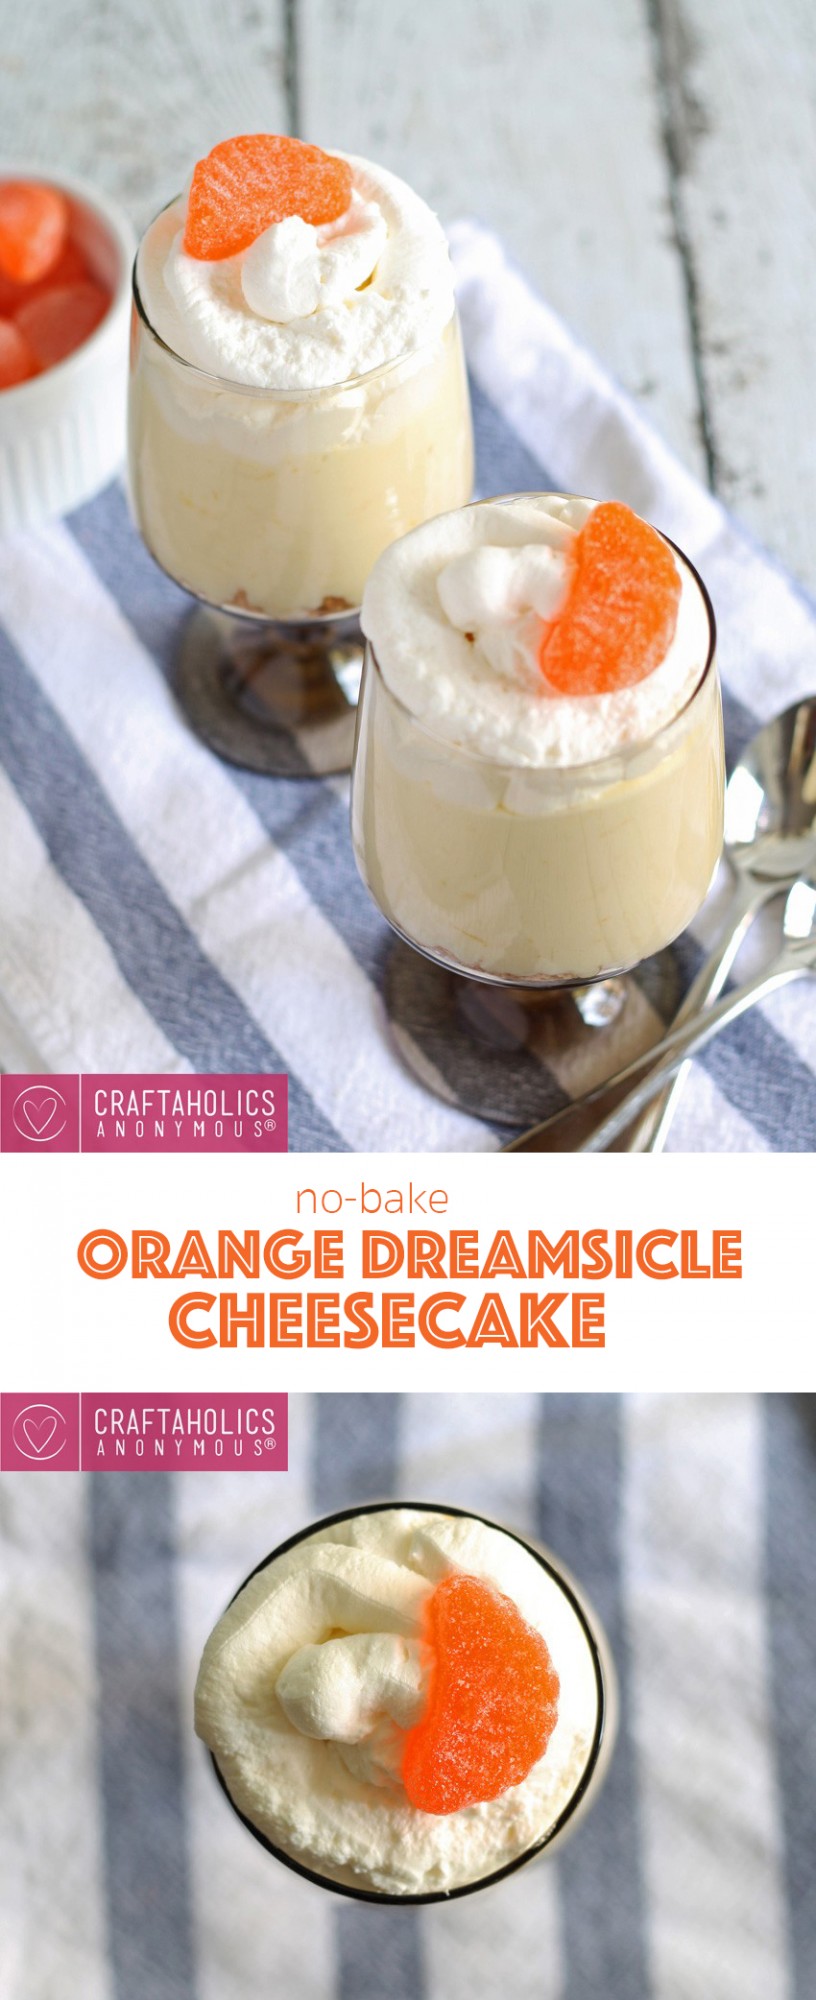 No-bake Orange Dreamsicle Cheesecake recipe || Scrumptious and refreshing! Tastes just like a dreamsicle.